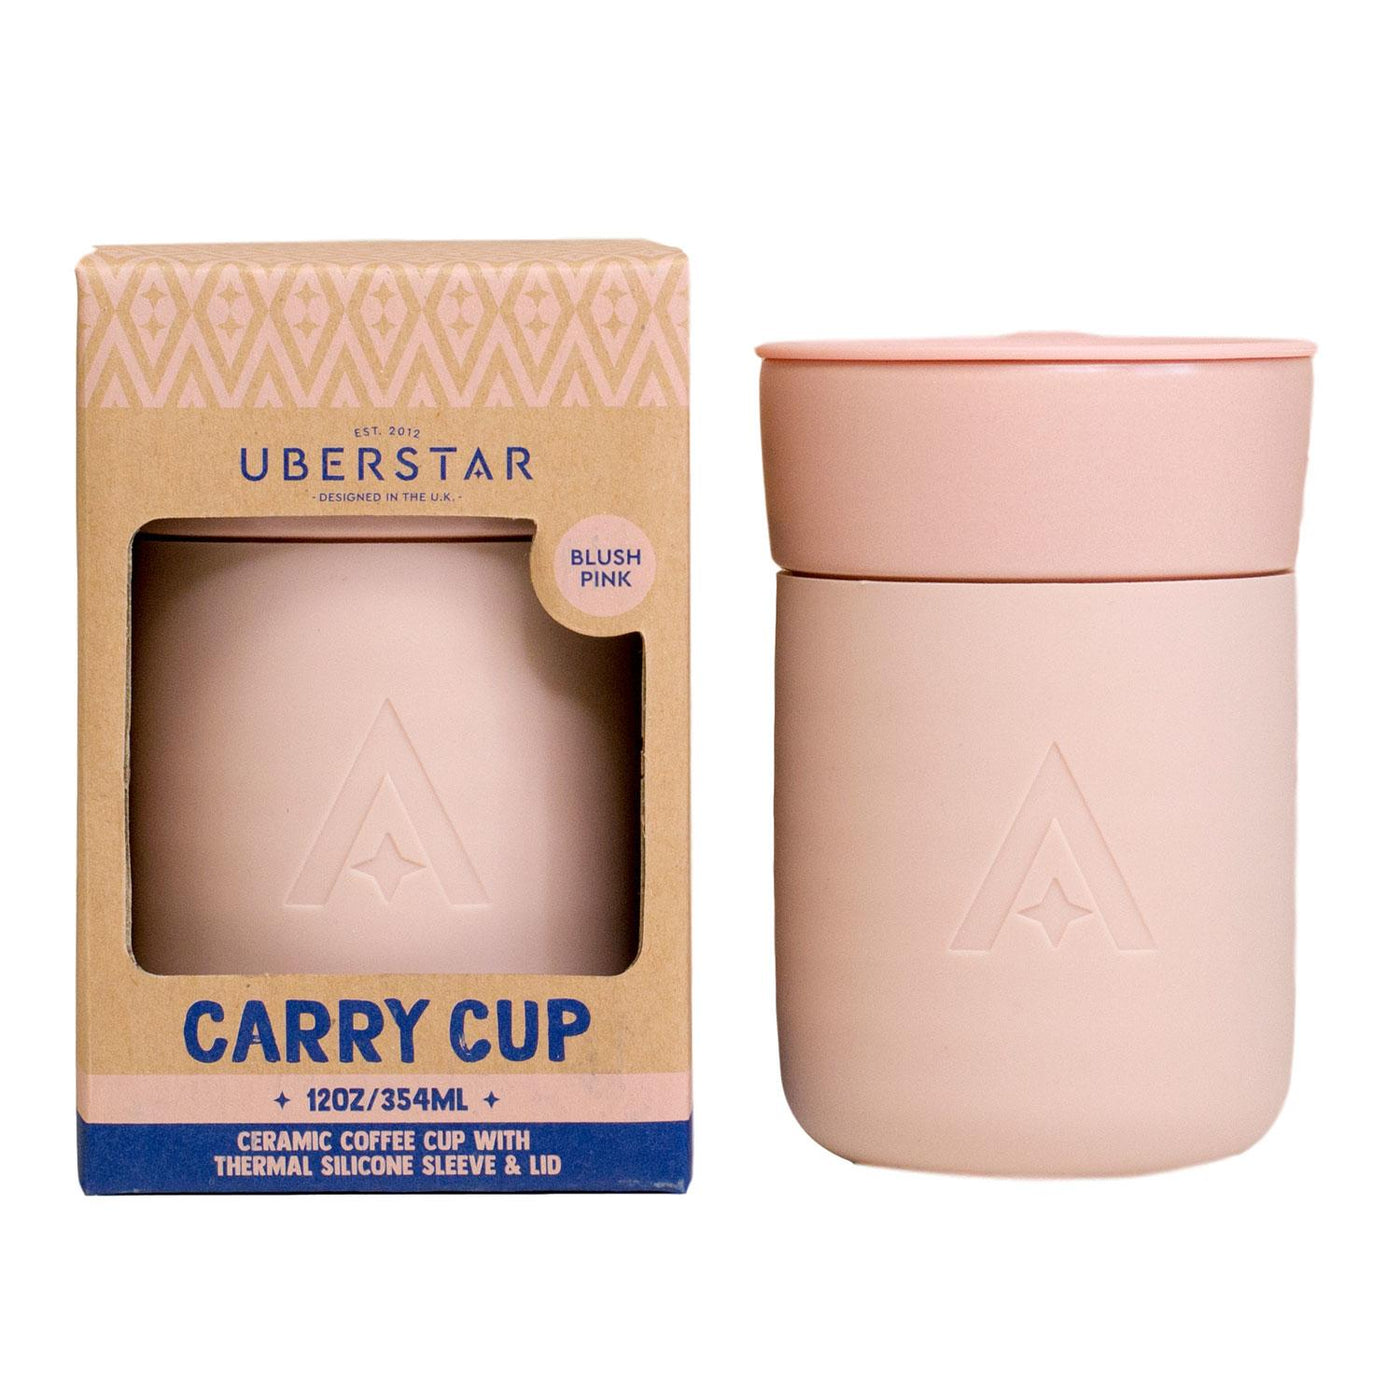 Uberstar Carry Cup - Blush